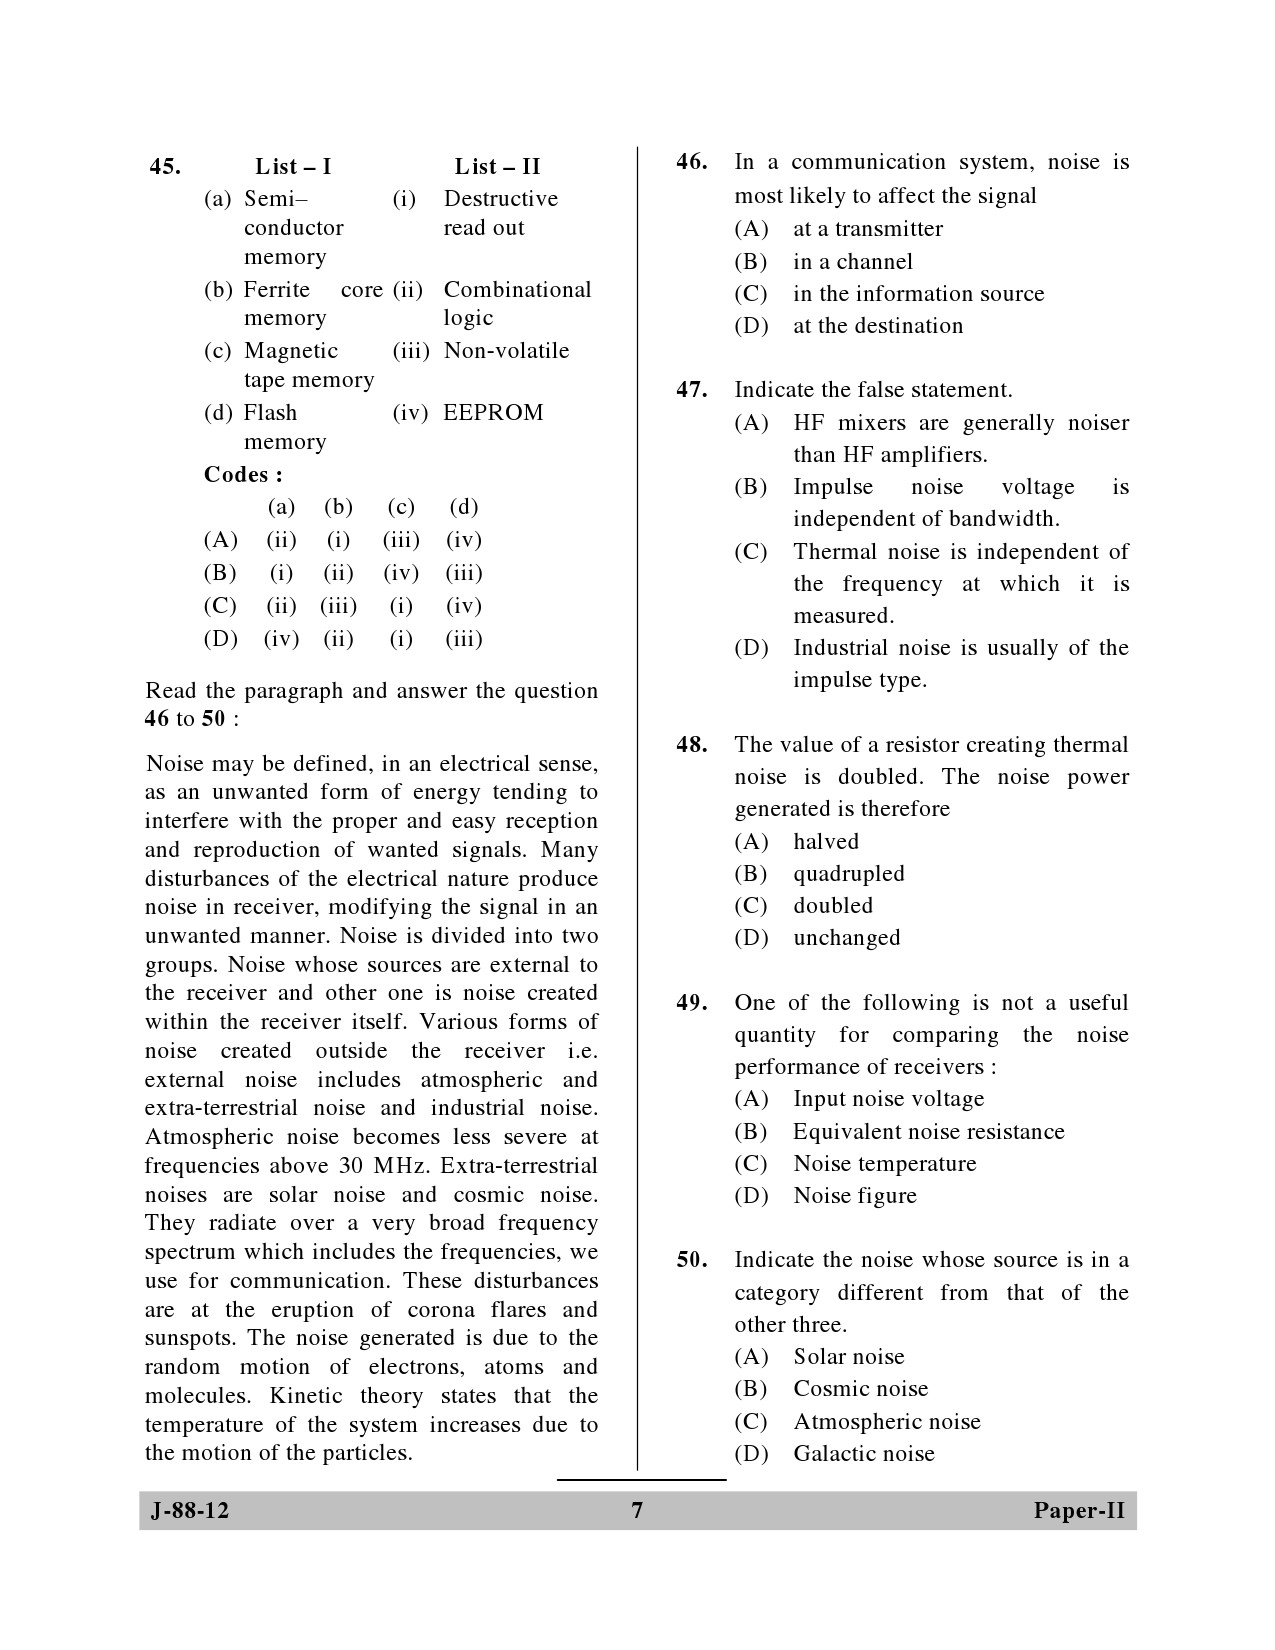 UGC NET Electronic Science Question Paper II June 2012 7